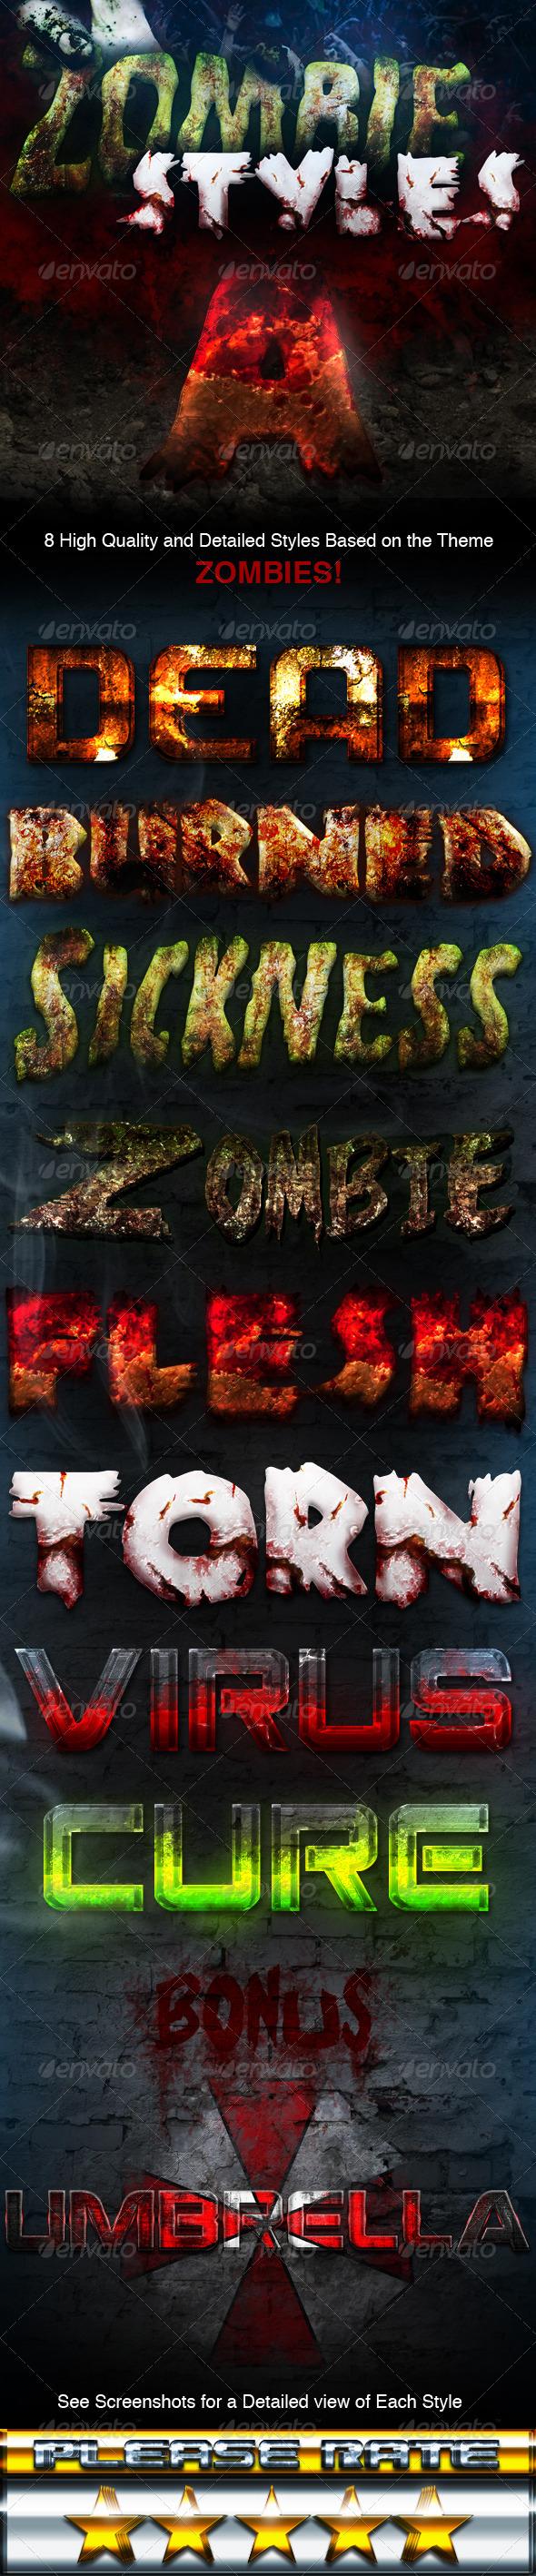 Scary Zombie Photoshop Styles